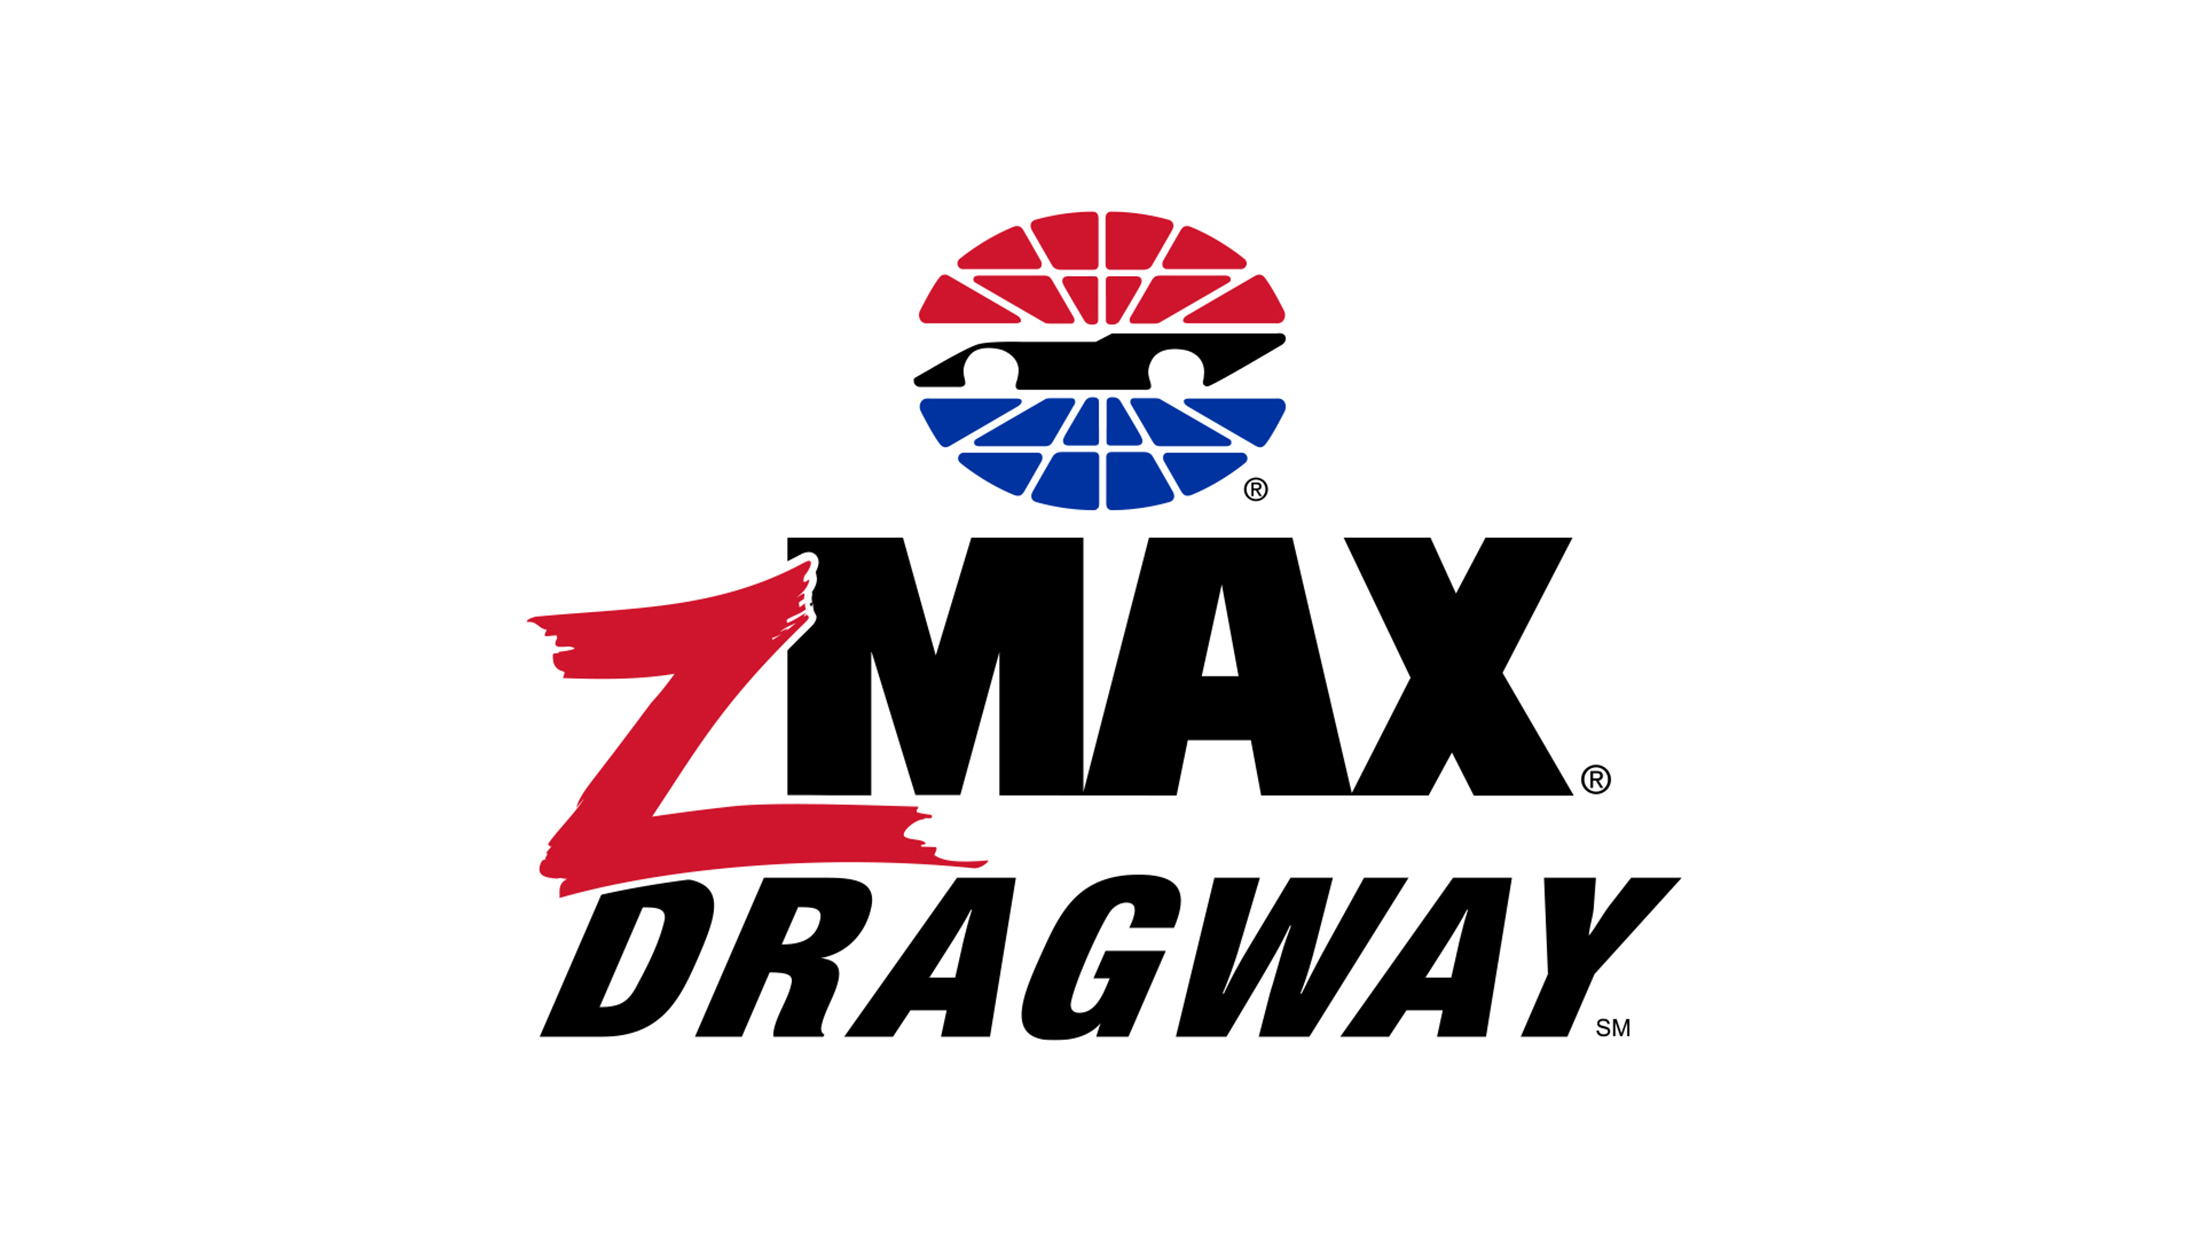 zMAX Dragway